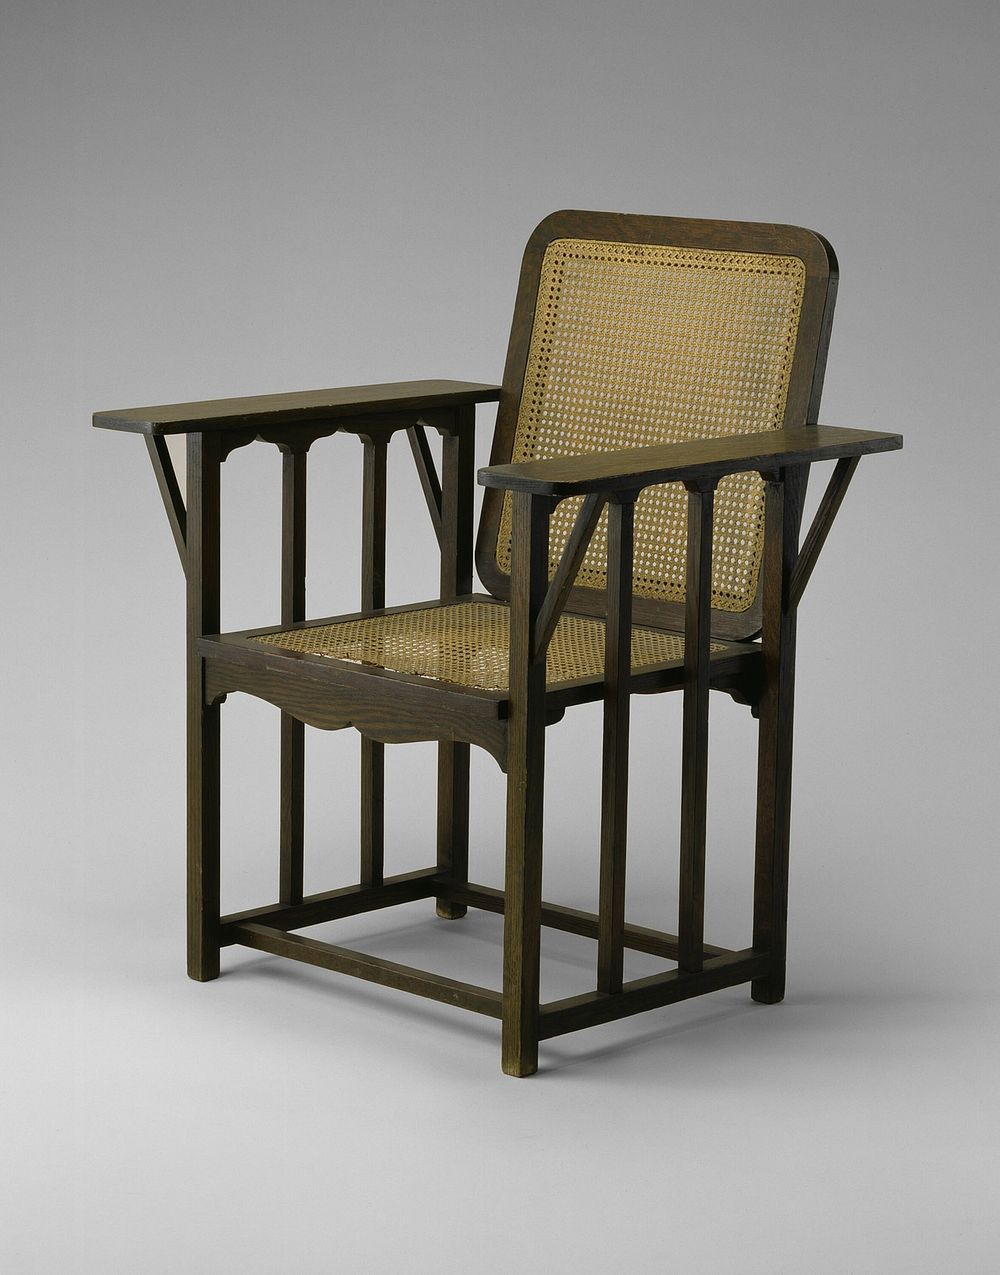 Armchair by David Wolcott Kendall